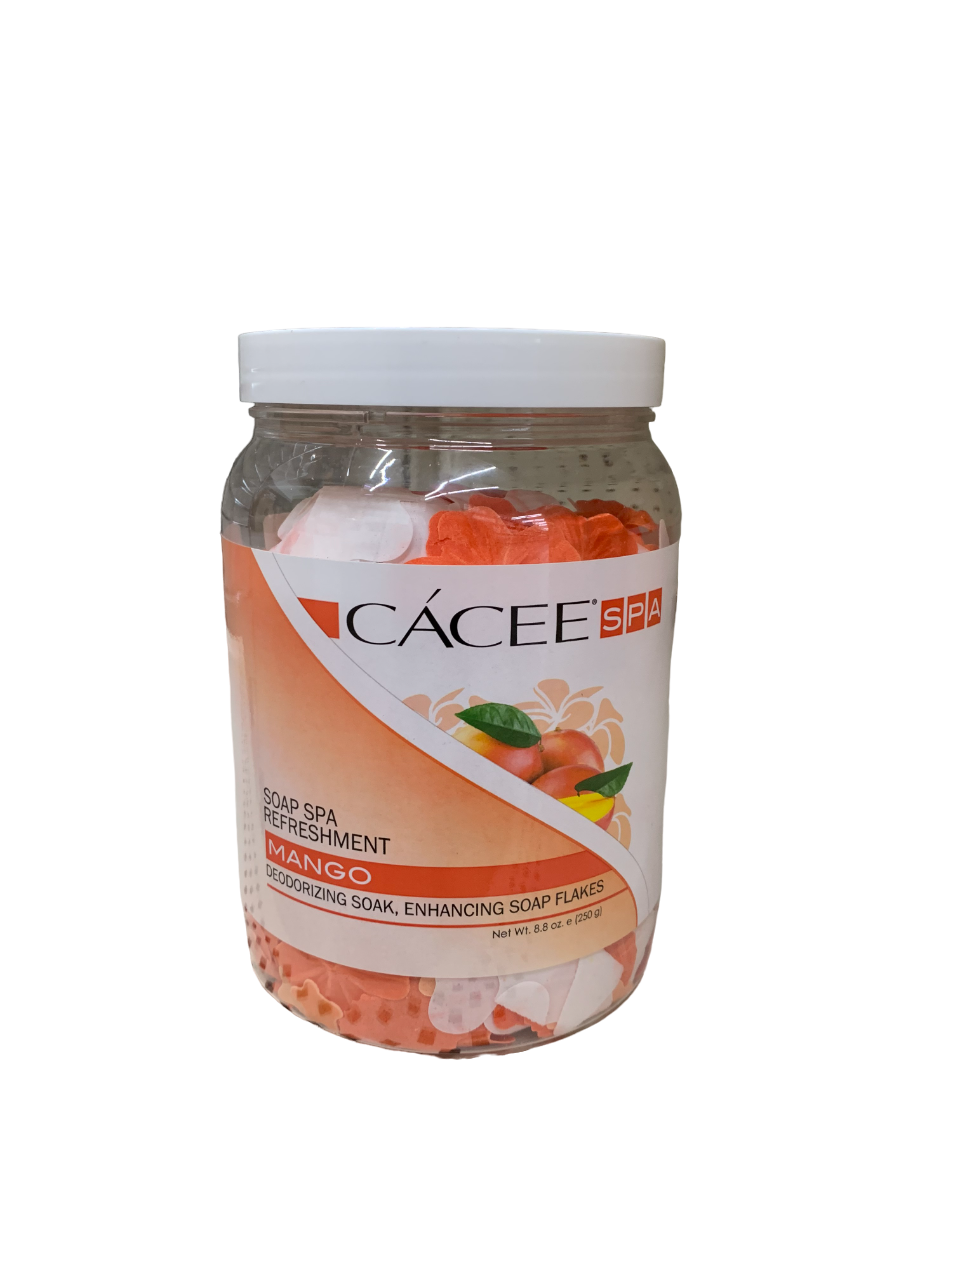 Cacee Soap Spa Refreshment Mango